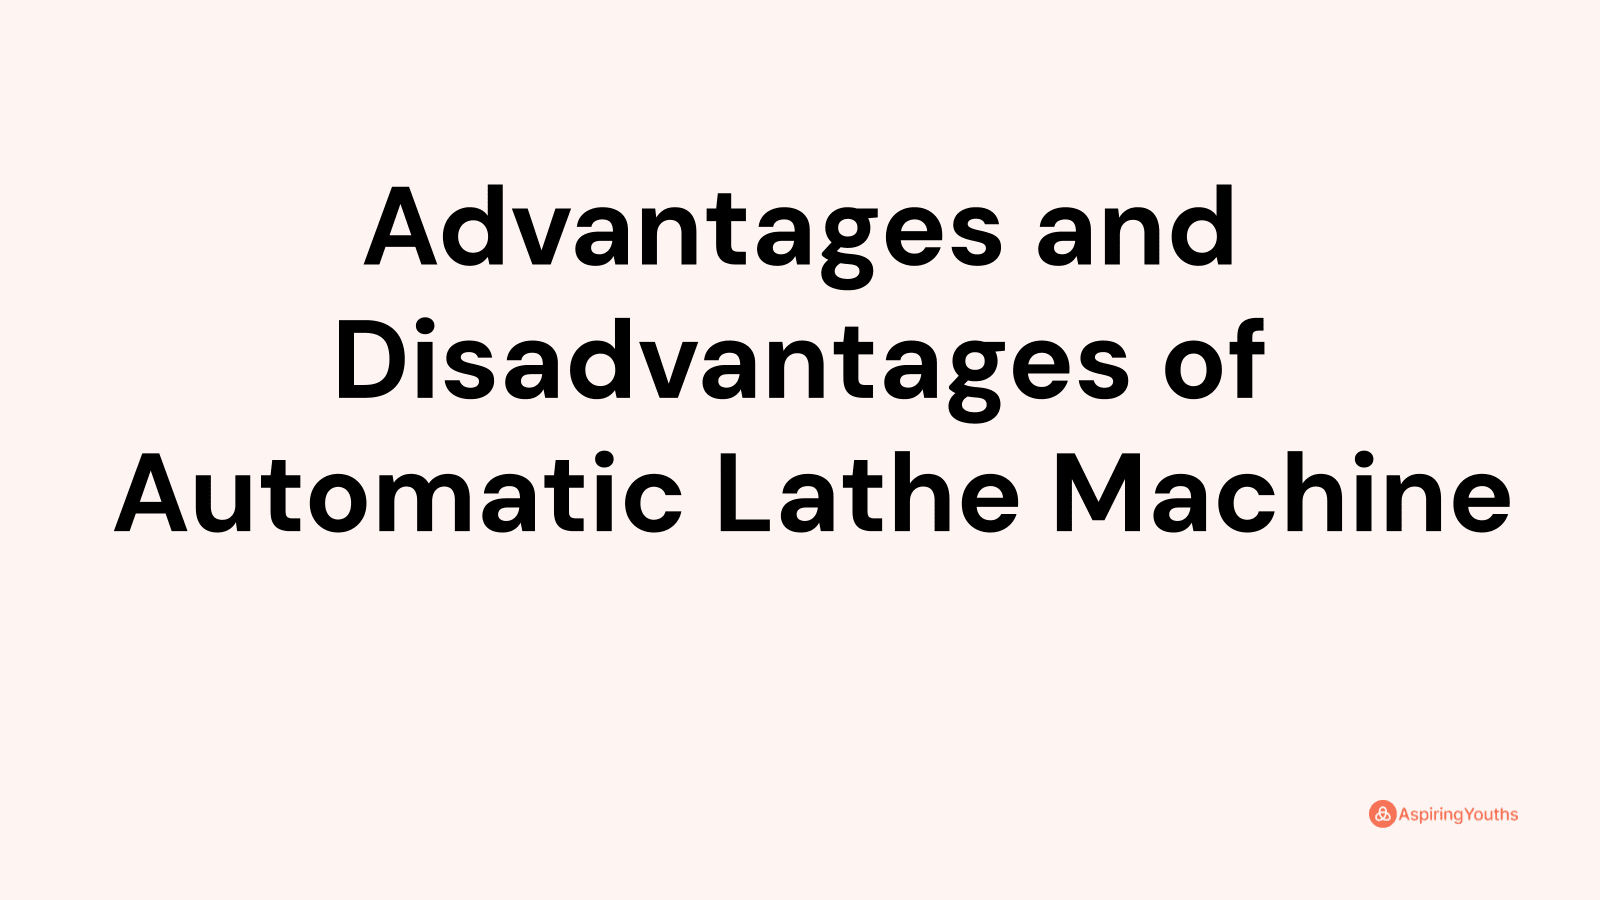 Advantages and disadvantages of Automatic Lathe Machine